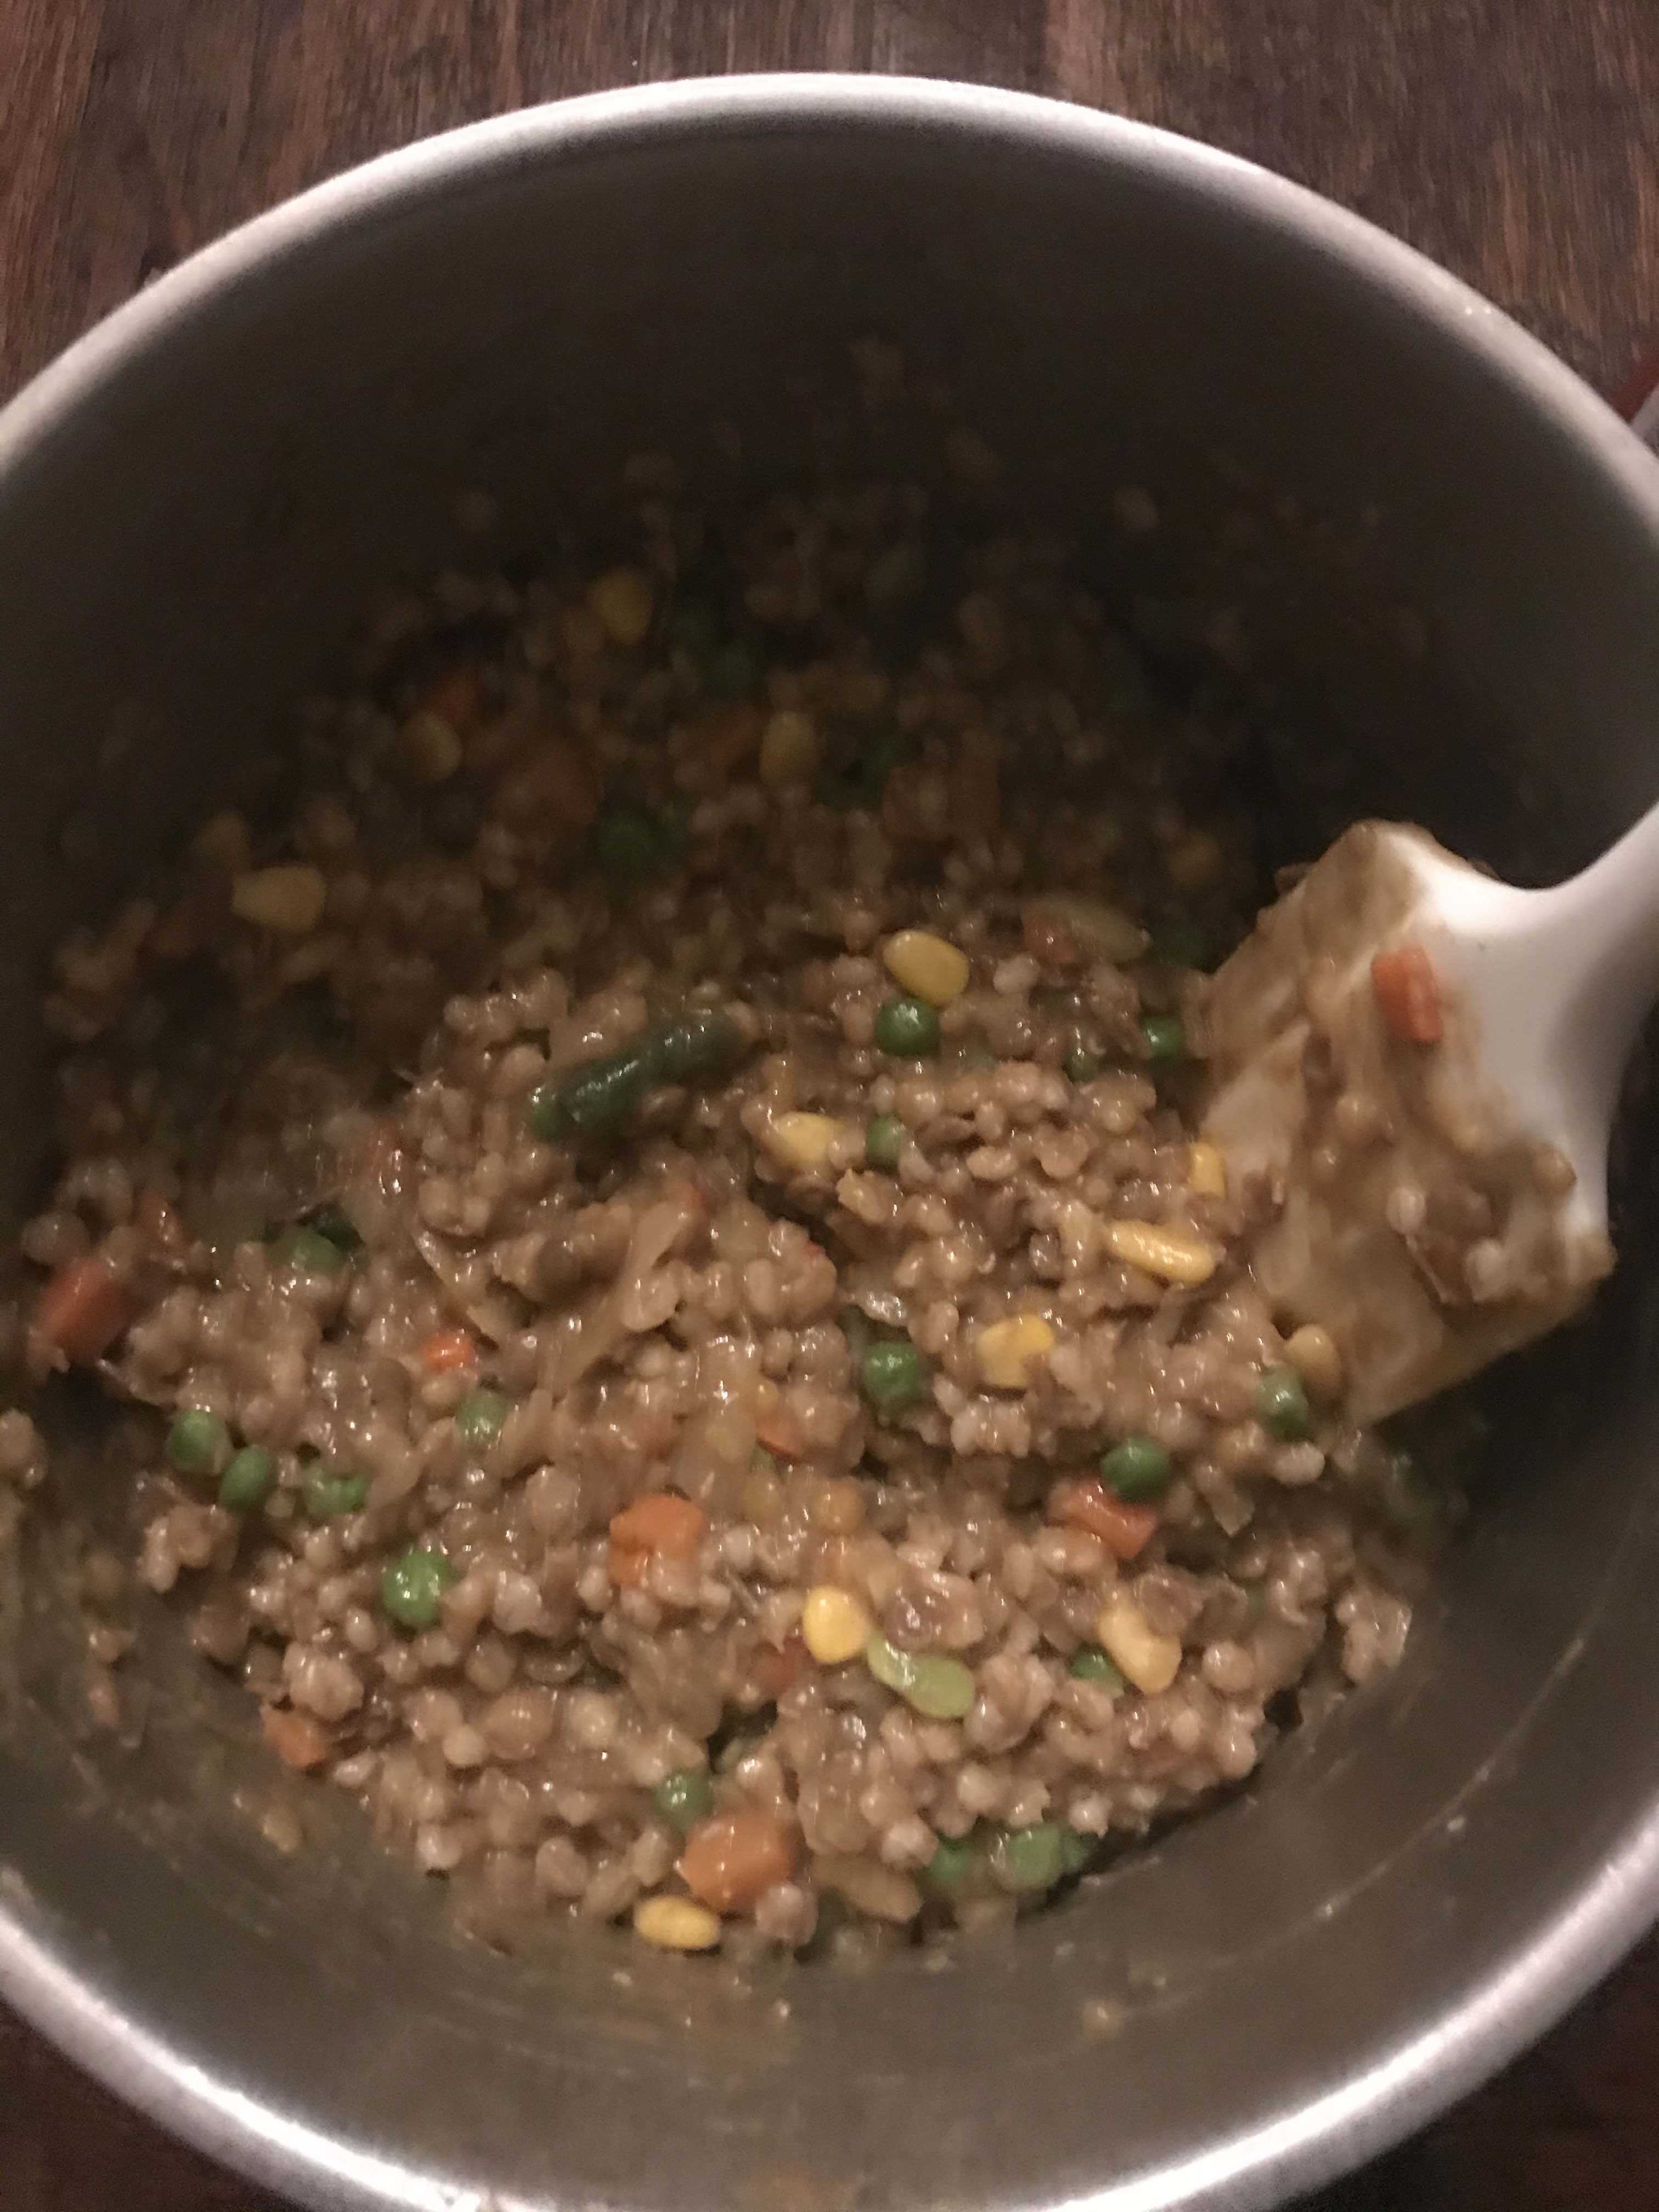 A pot of lentils, barley, and frozen vegetables